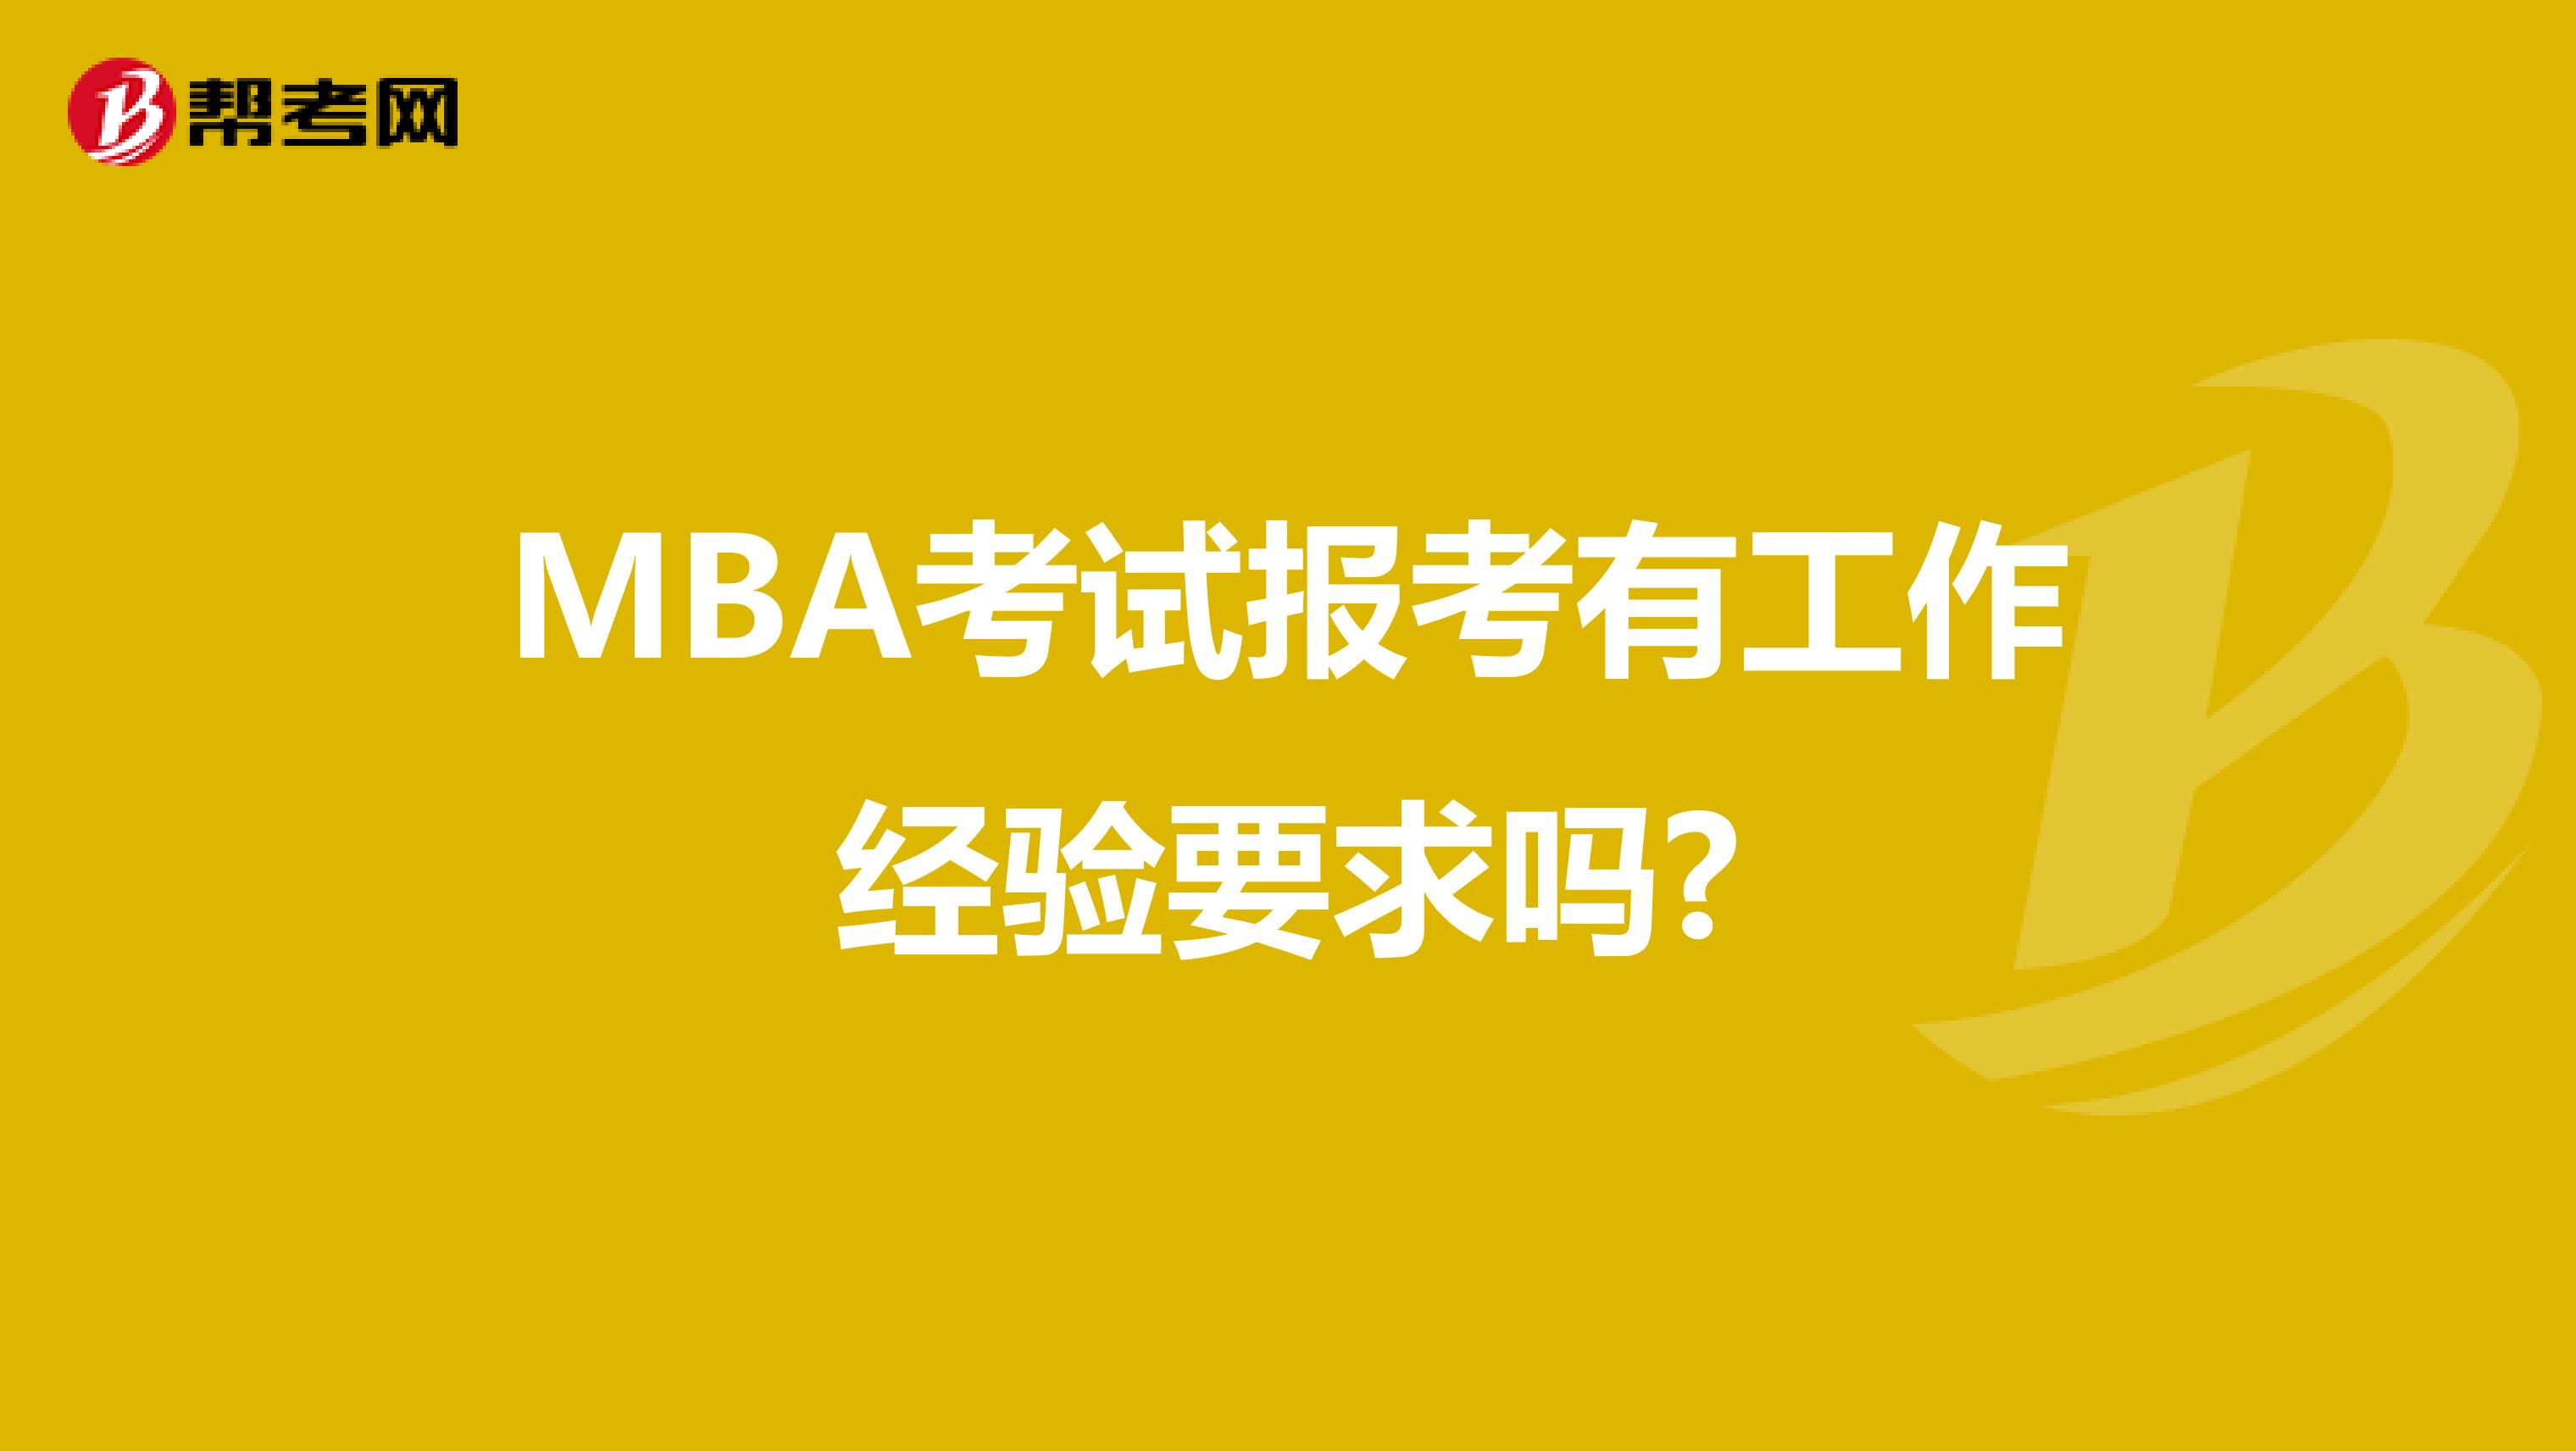 MBA考试报考有工作经验要求吗?